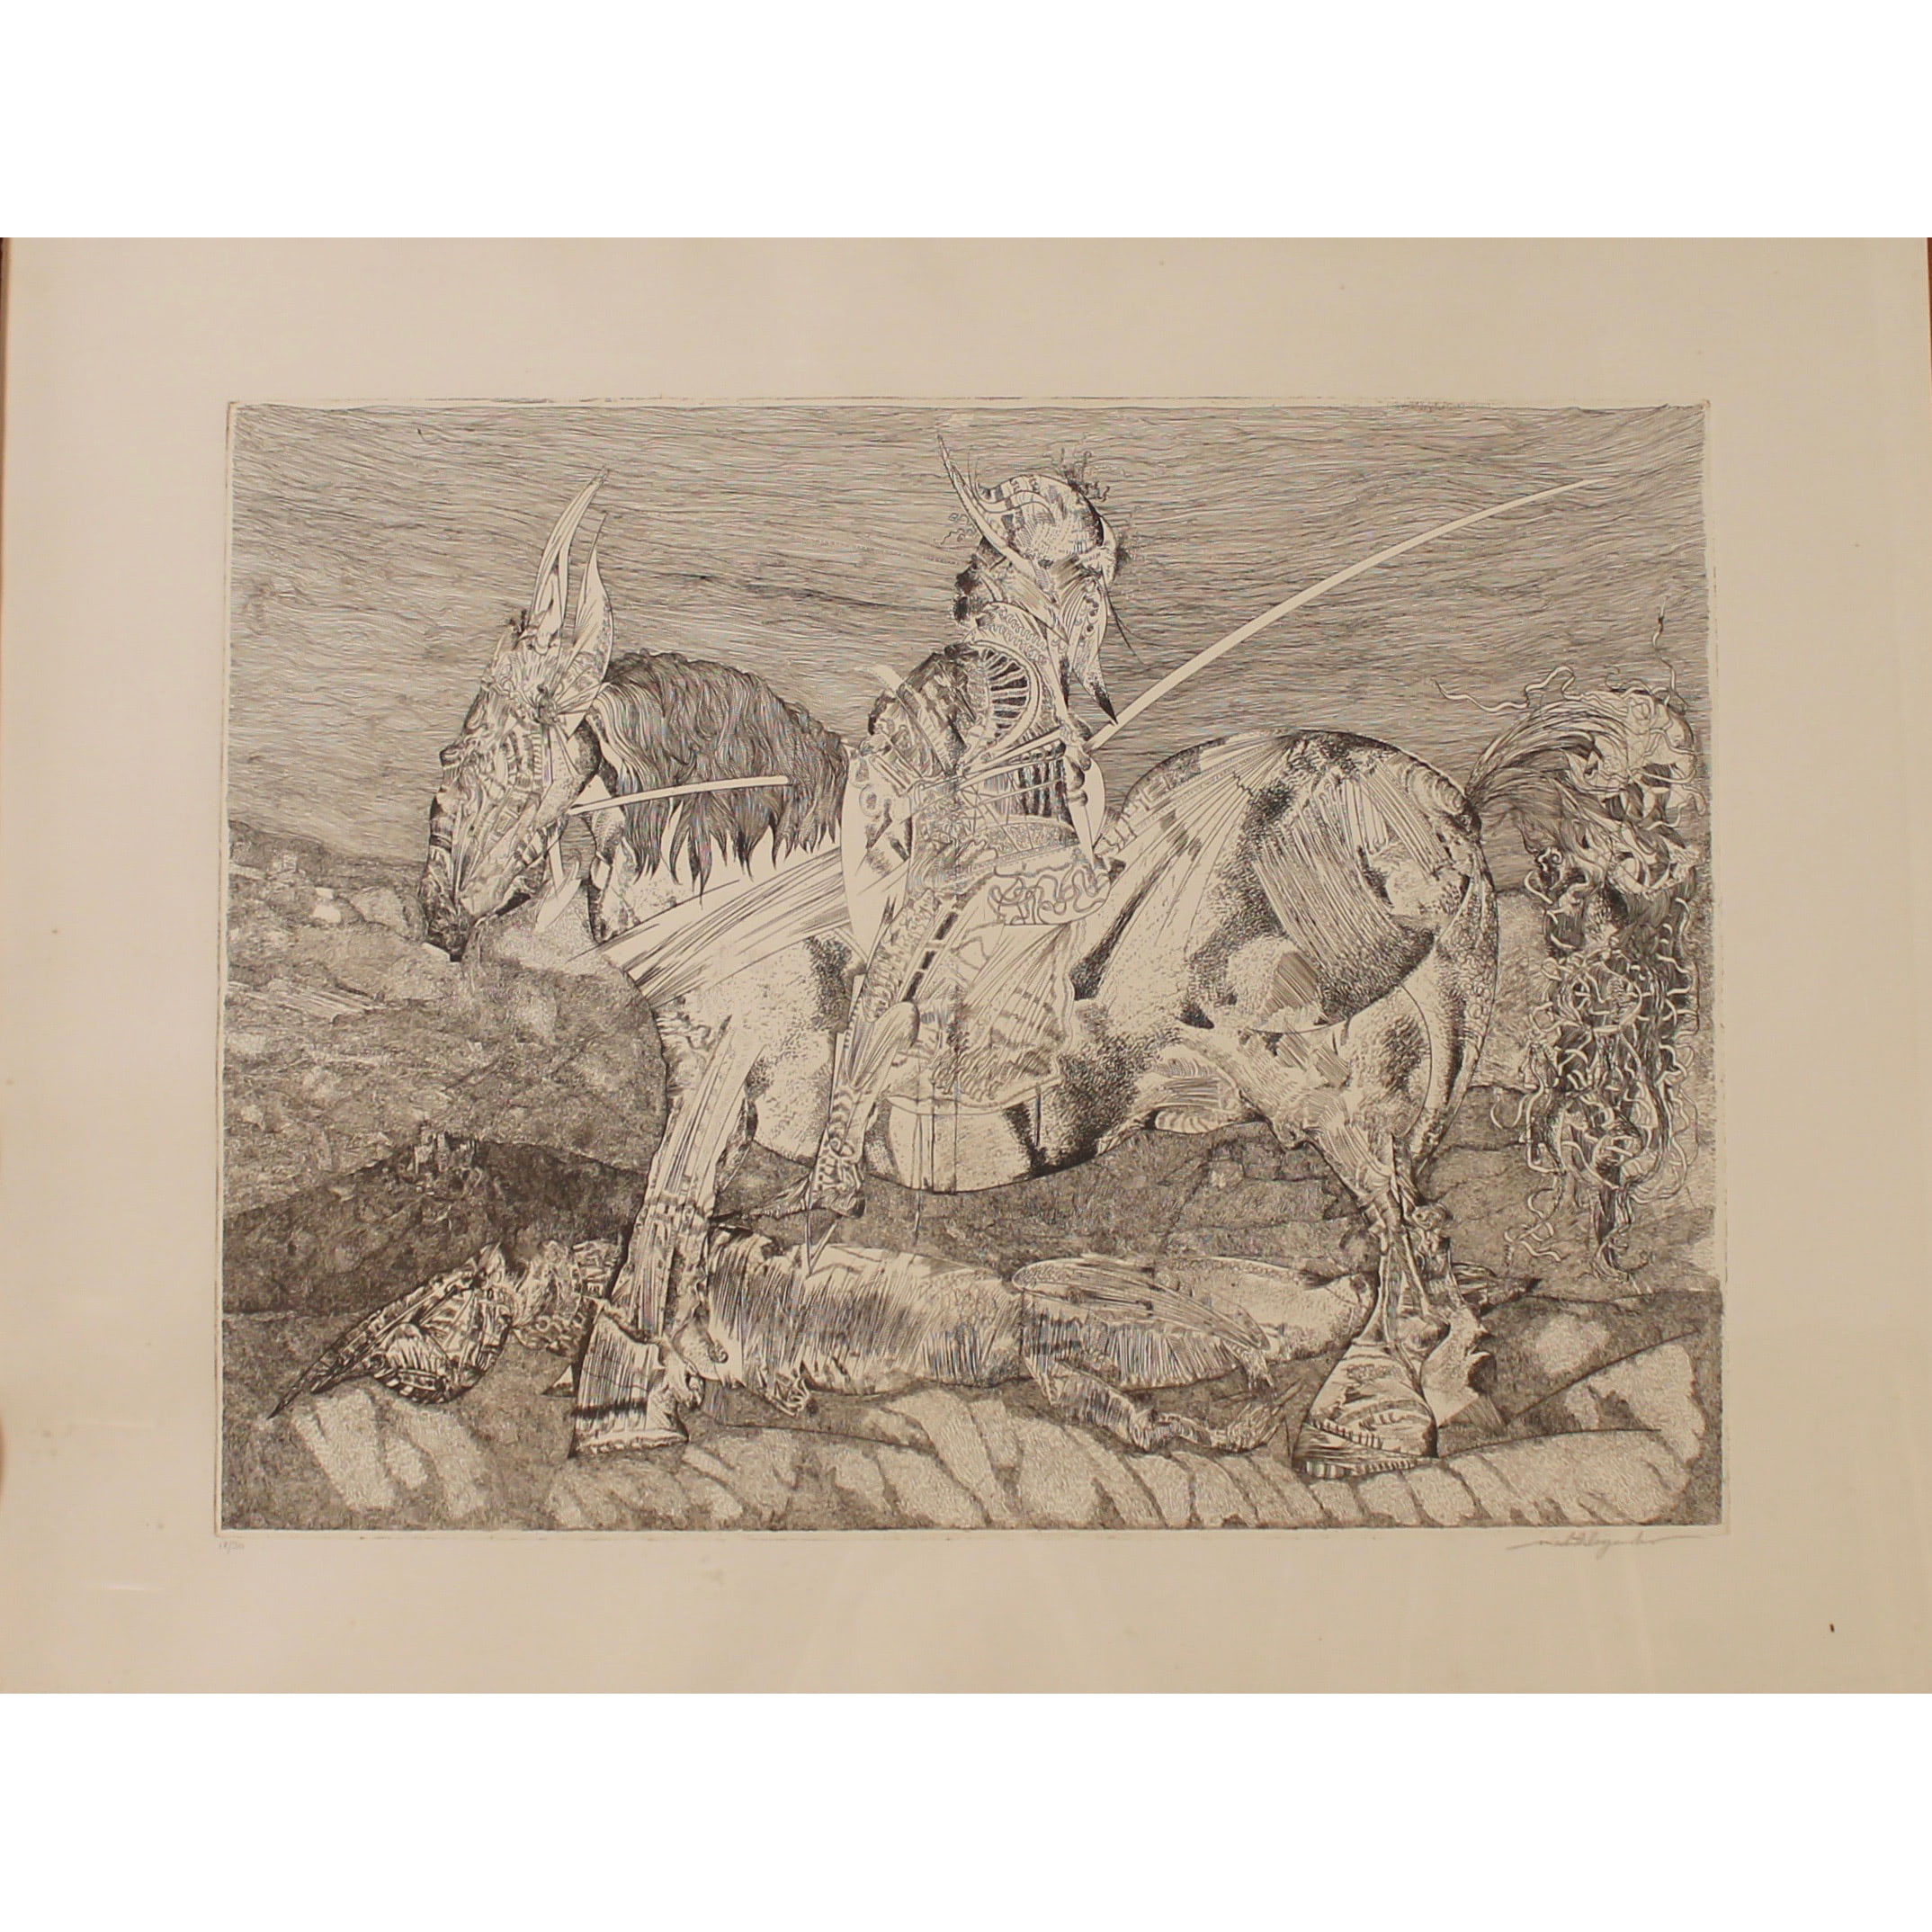 NICOLO D'ALESSANDRO "Cavaliere a cavallo" - "Knight on horseback" 